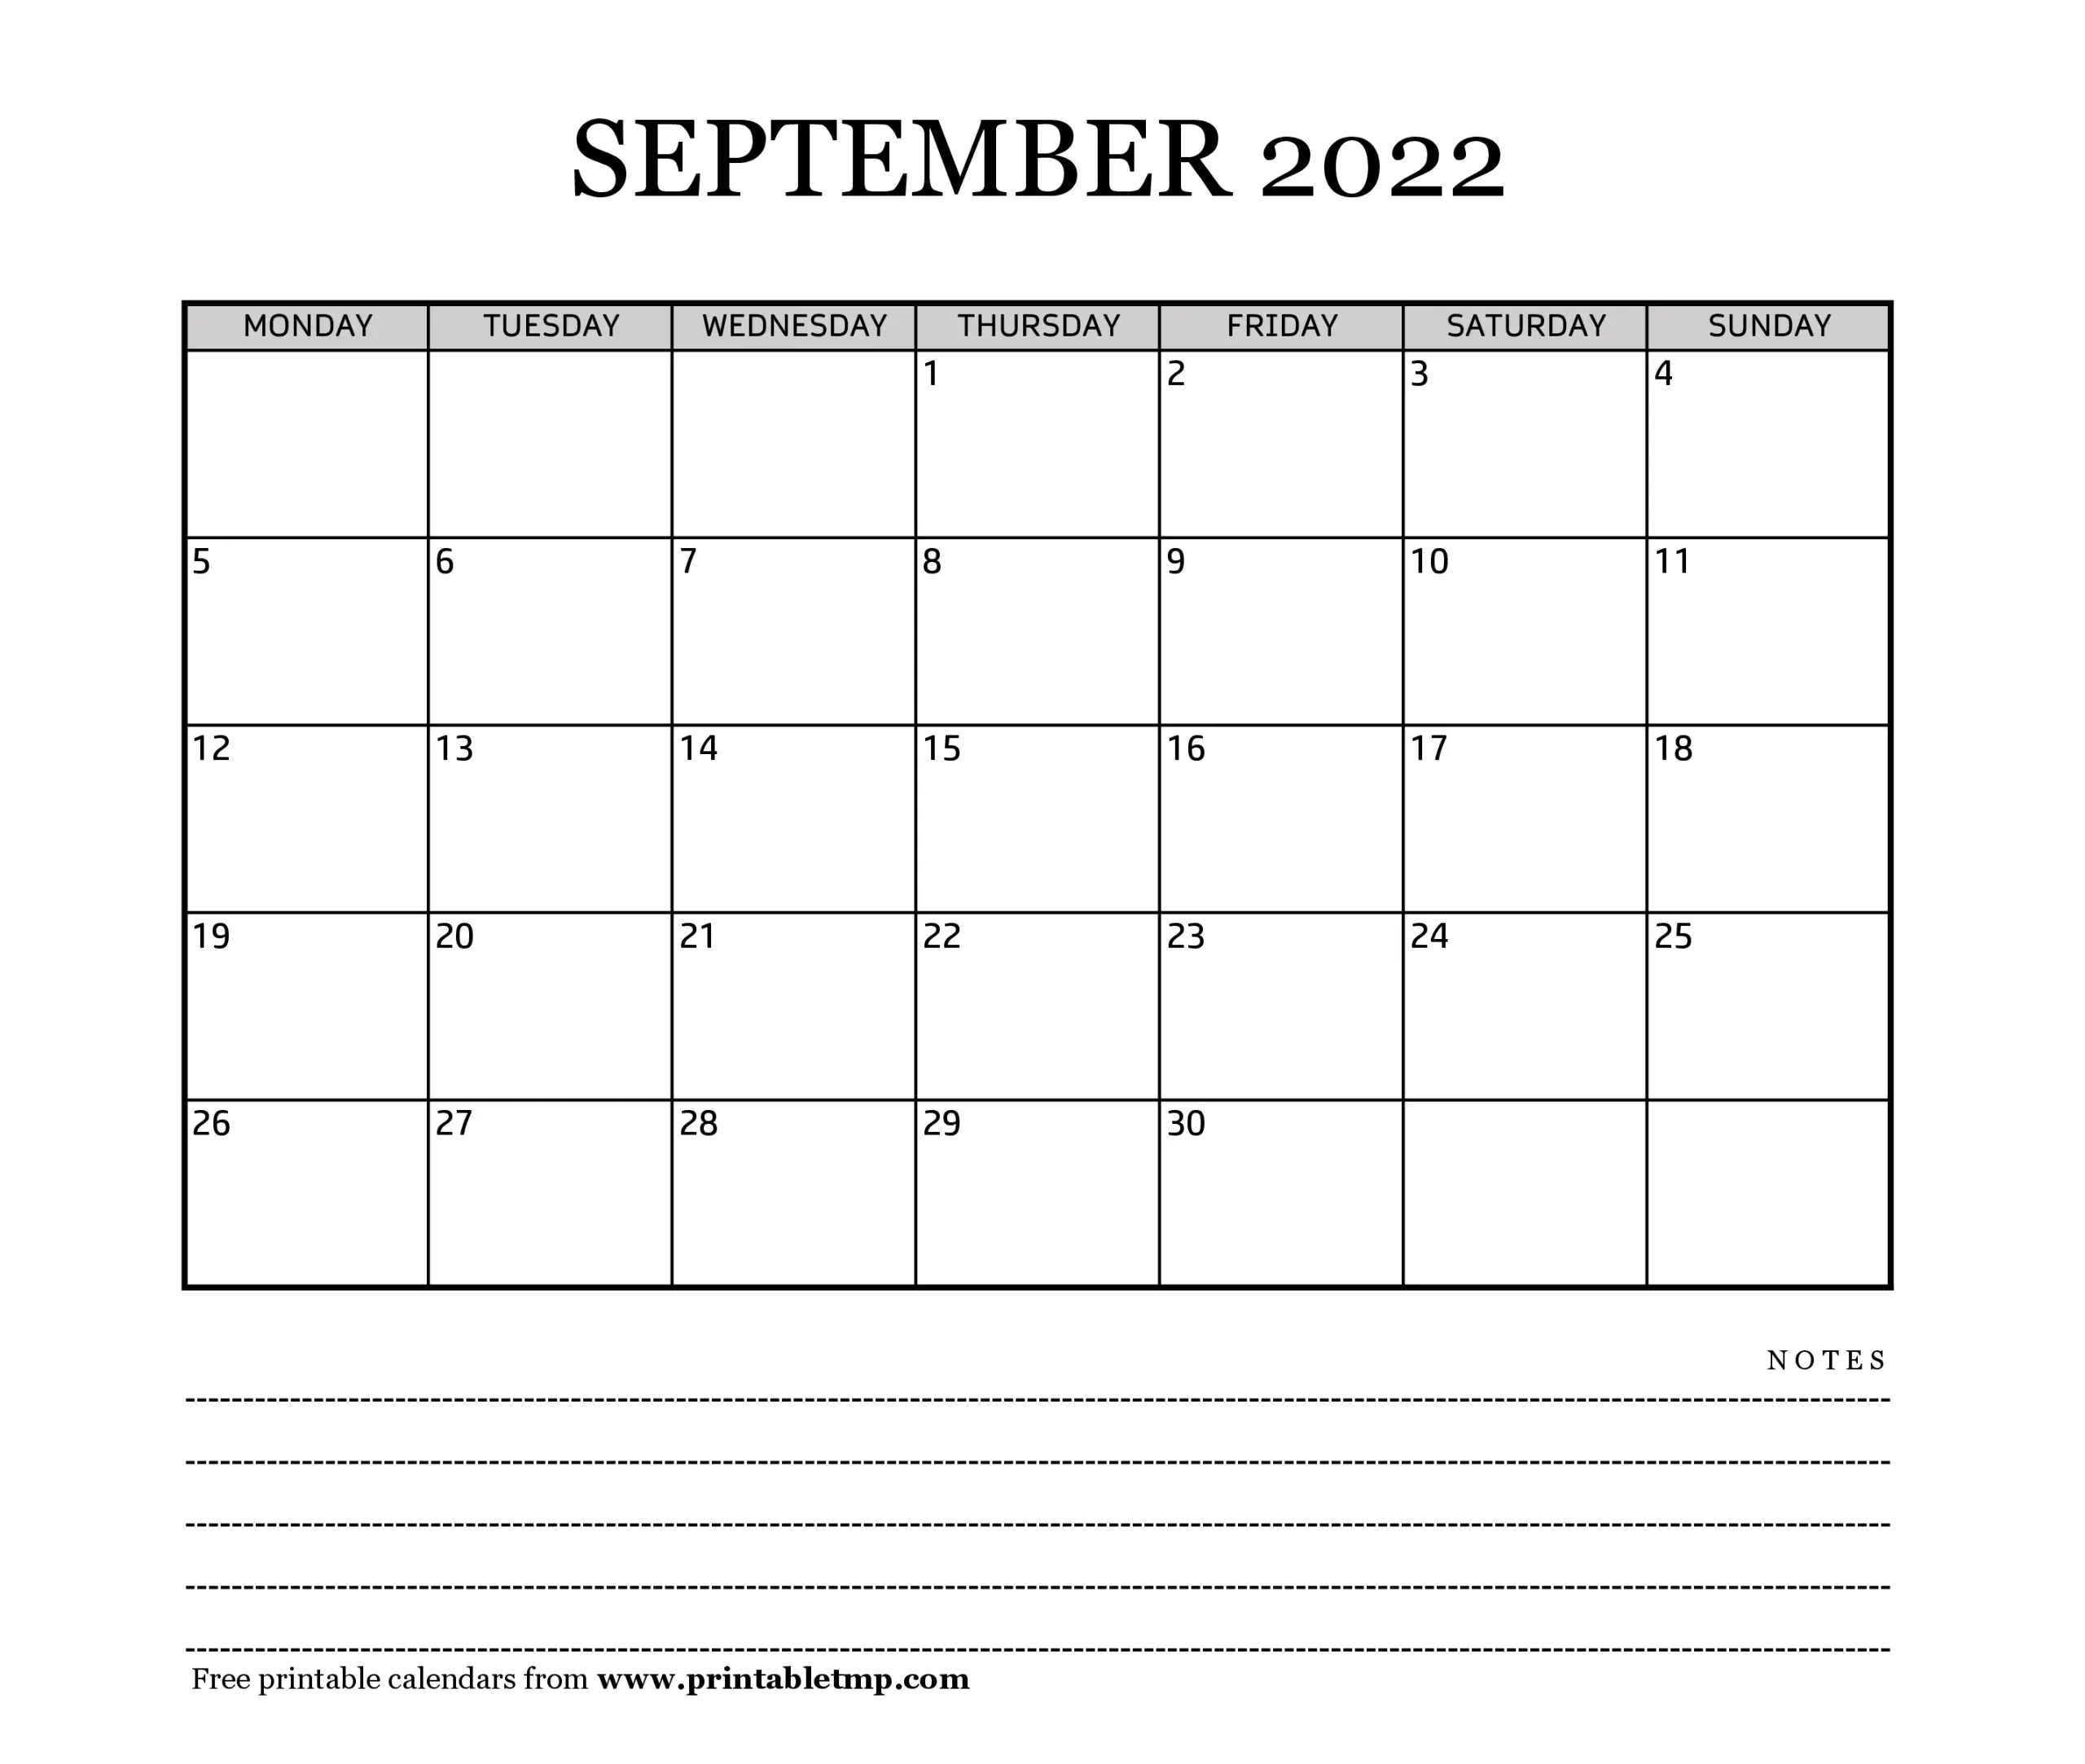 September 2022 Calendar Printable with Notes